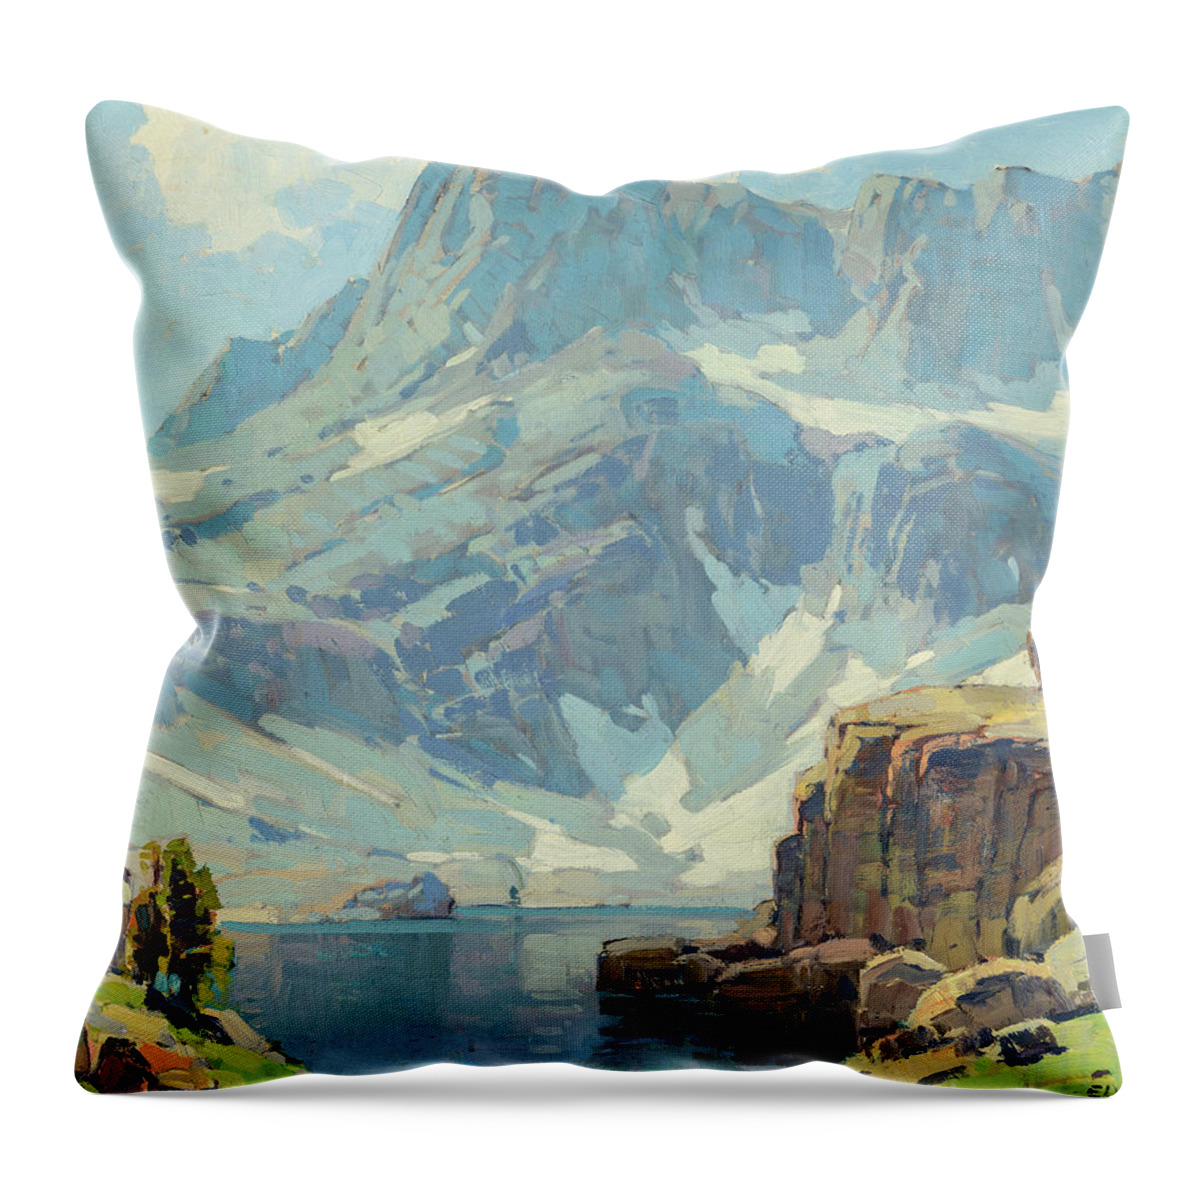 Edgar Payne Throw Pillow featuring the painting High Sierra Lake by Edgar Payne